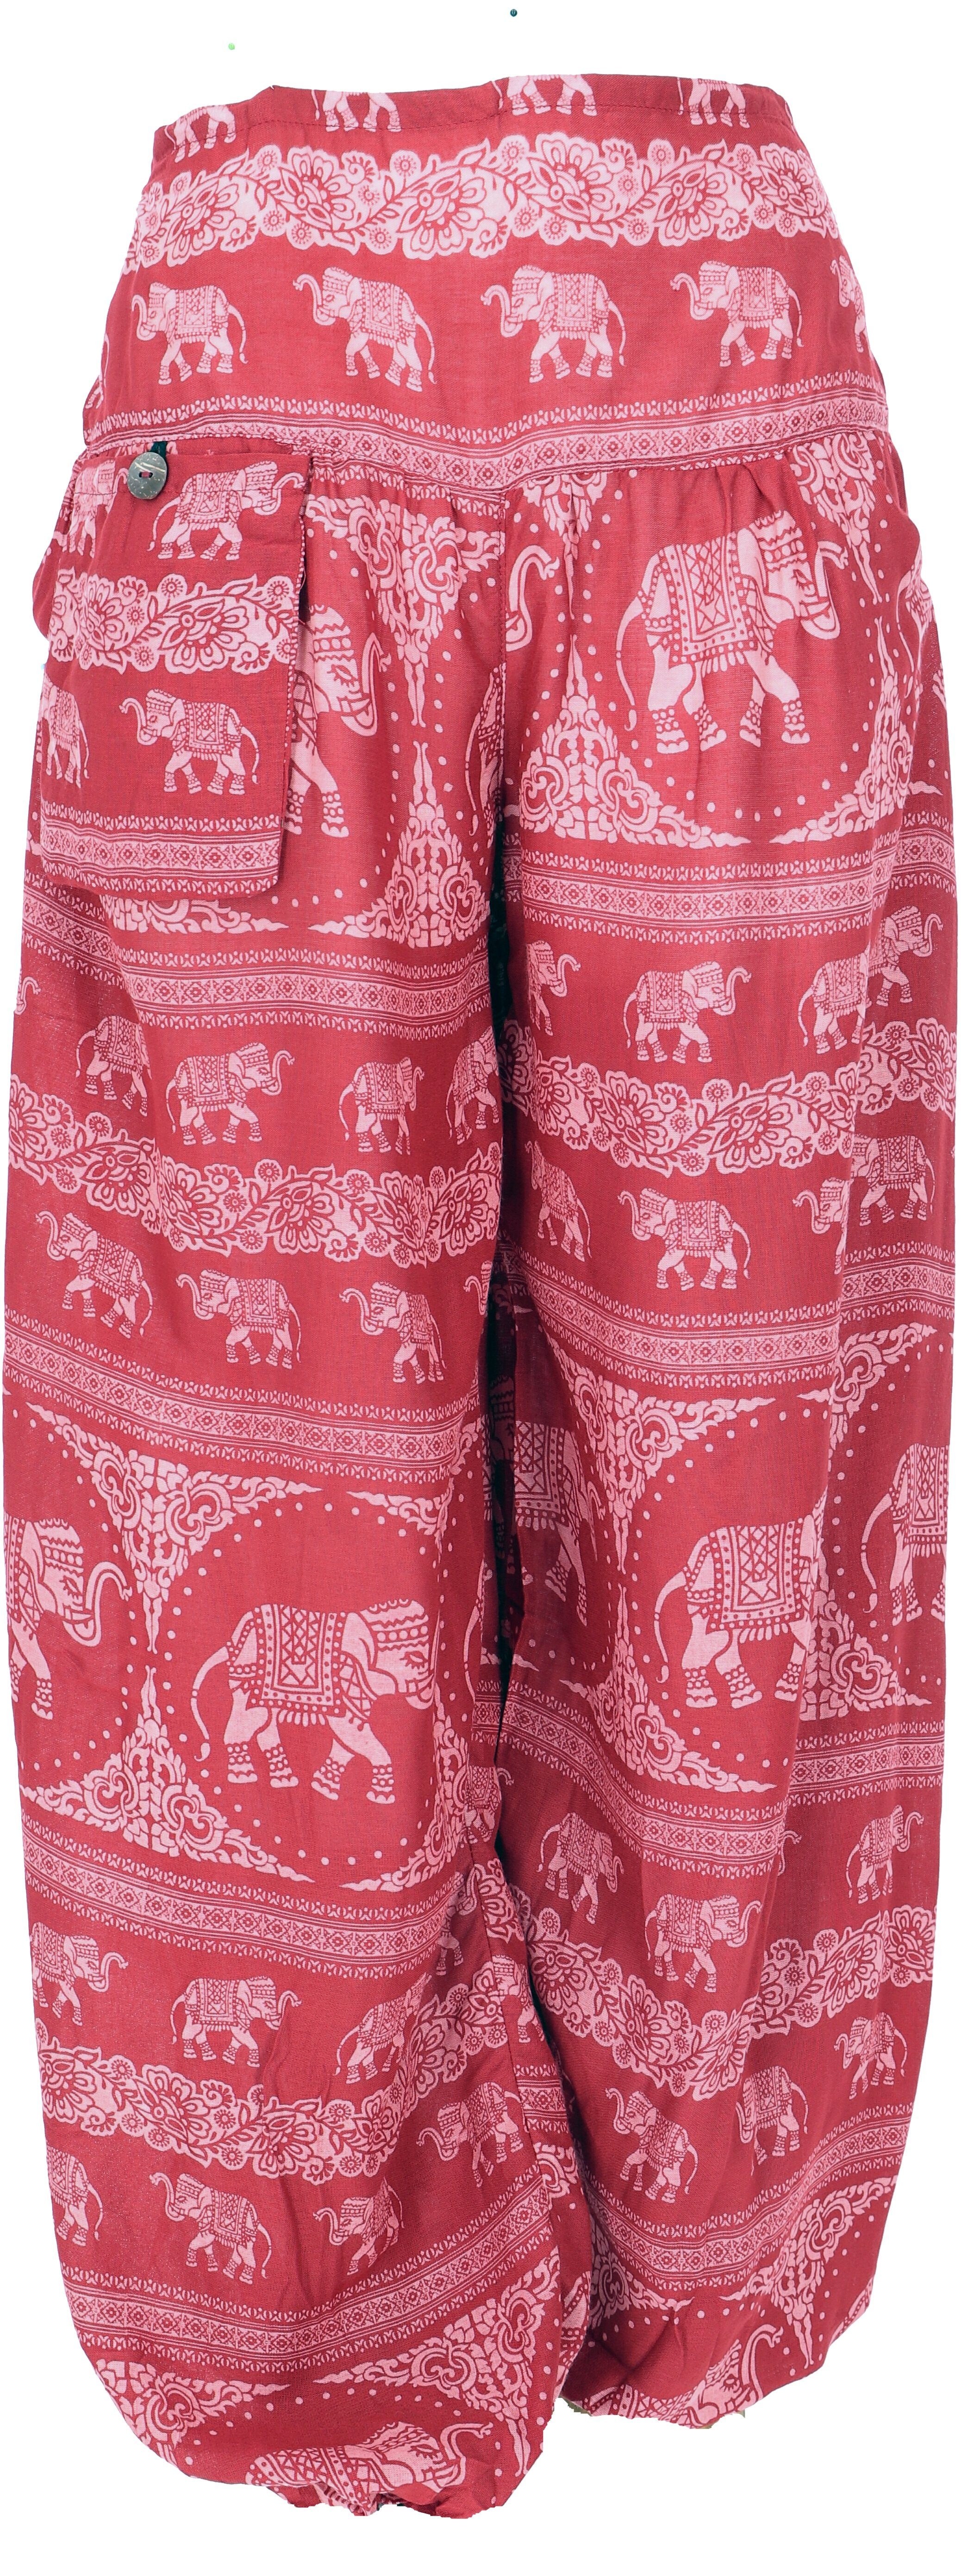 Guru-Shop Relaxhose Luftige Pluderhose mit Elefantendruck,.. Ethno Style, alternative Bekleidung rot